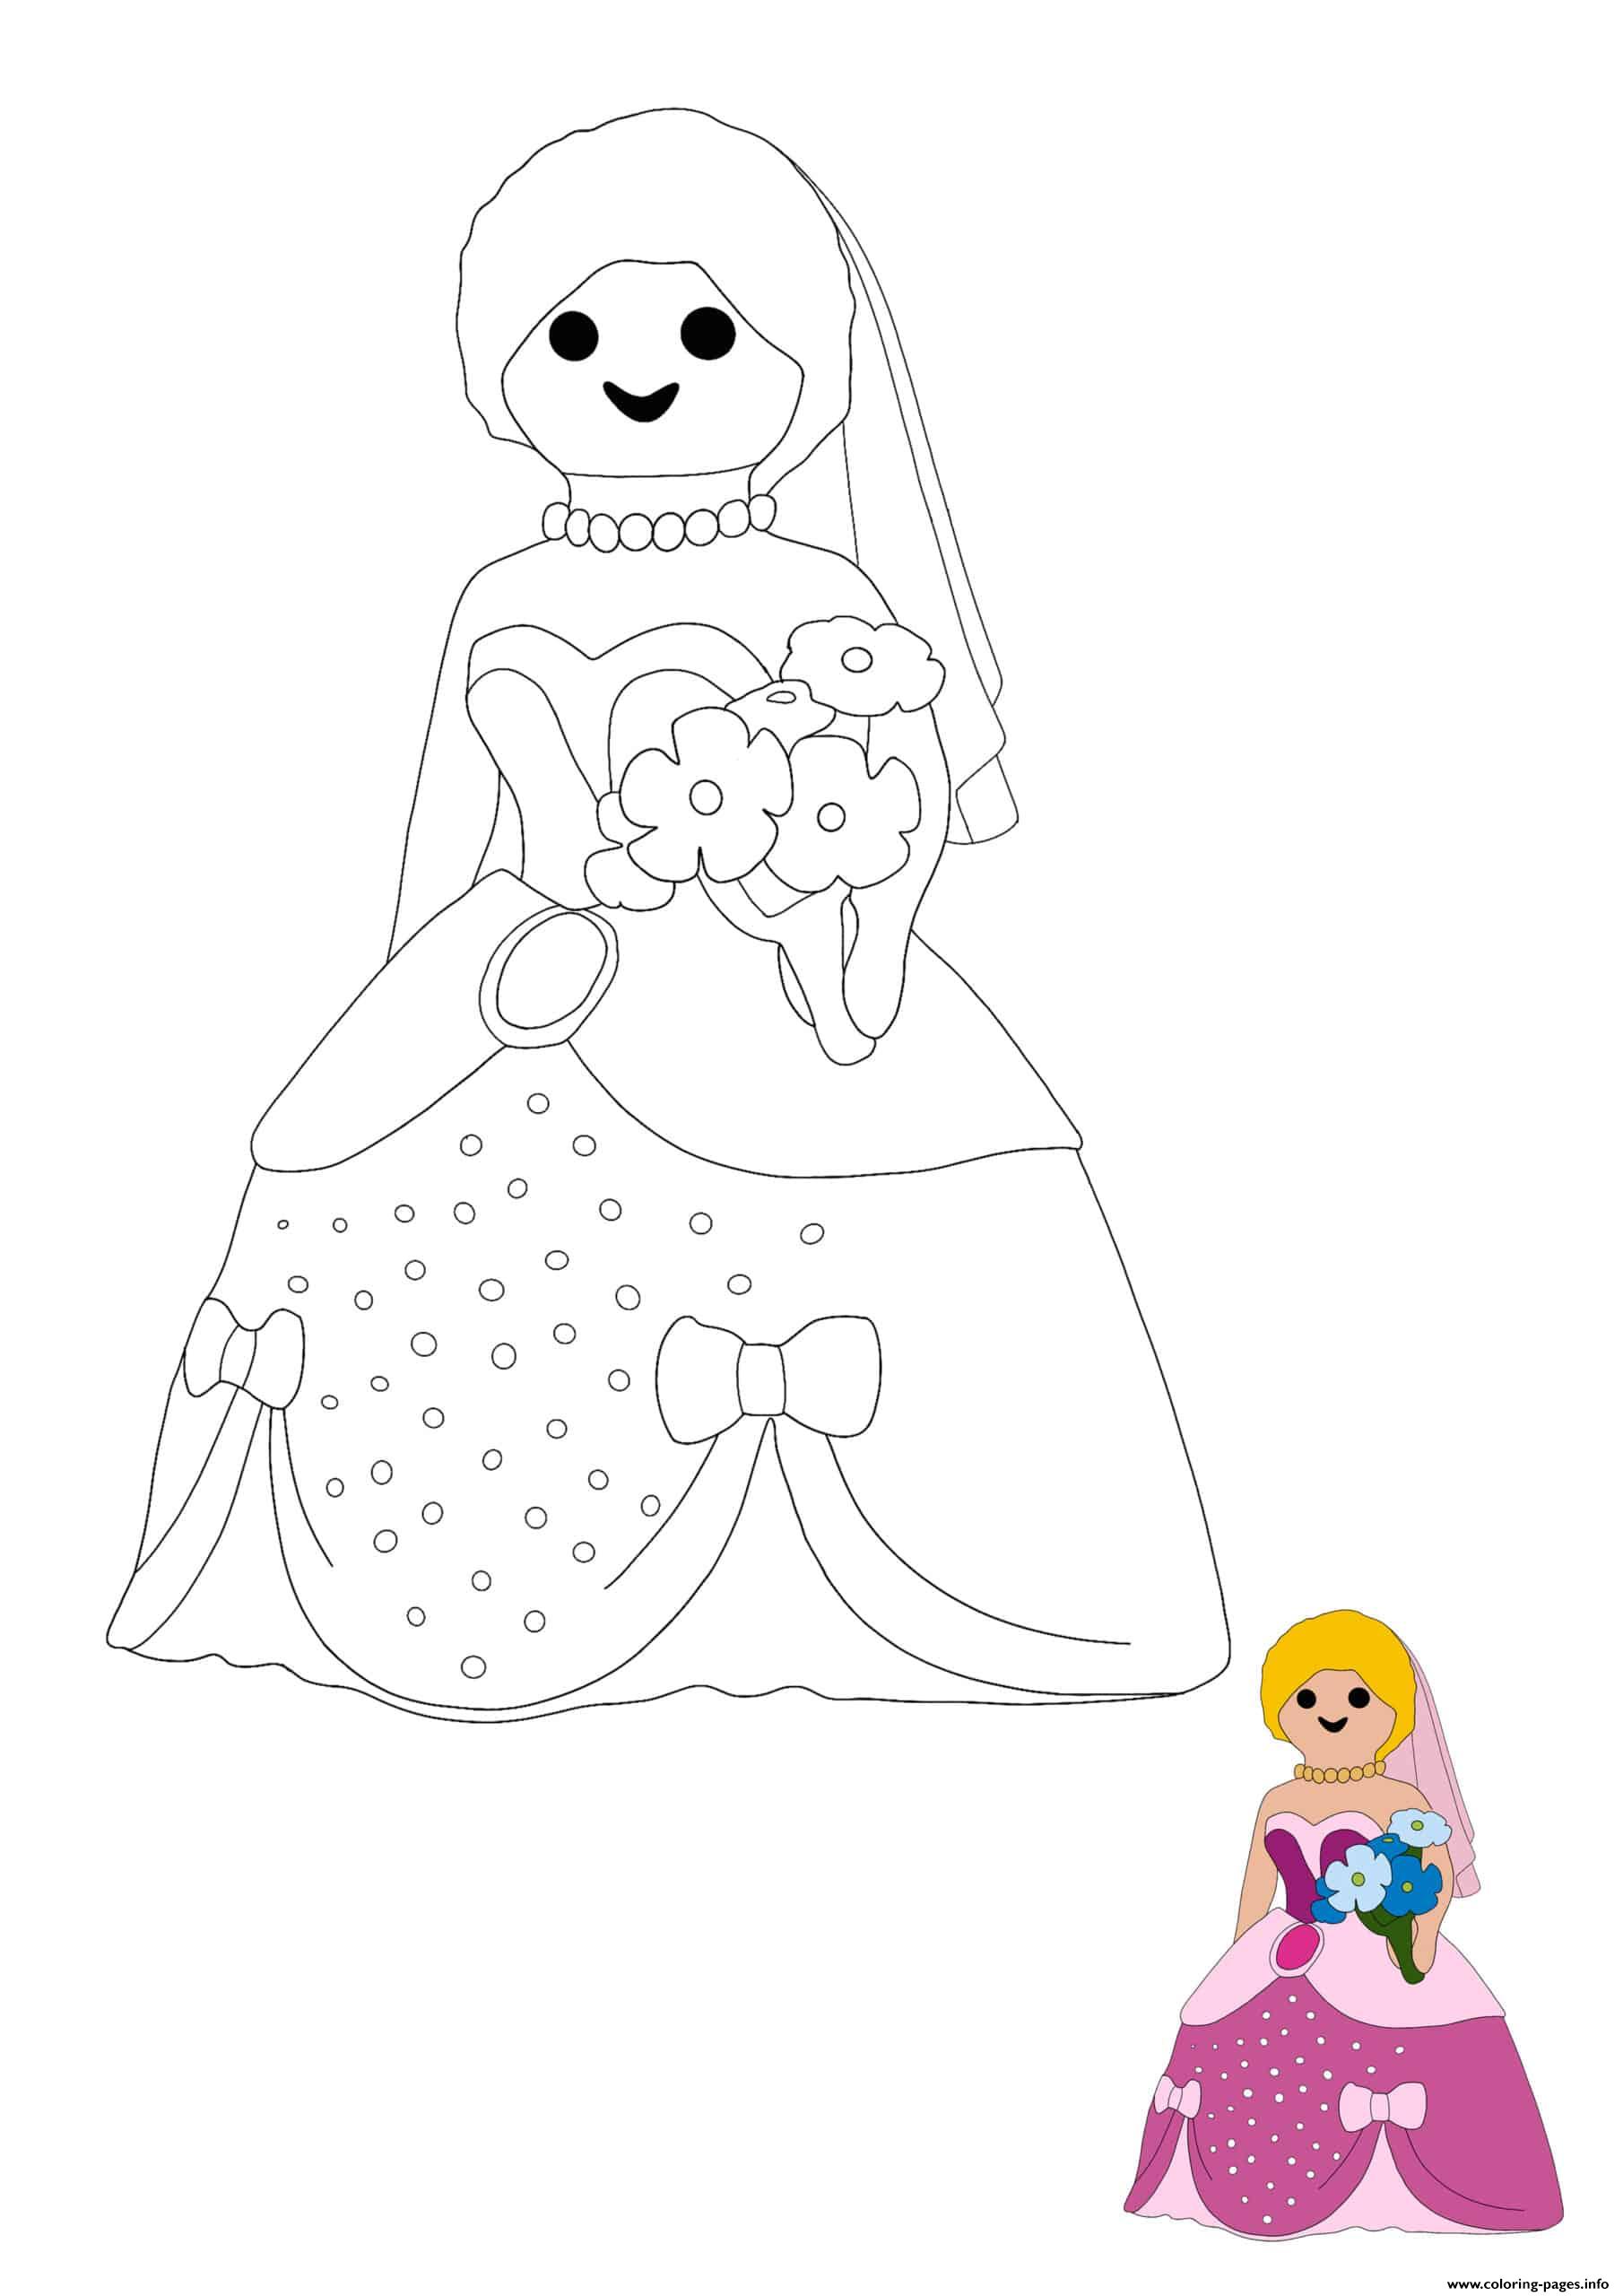 Playmobil Princess coloring